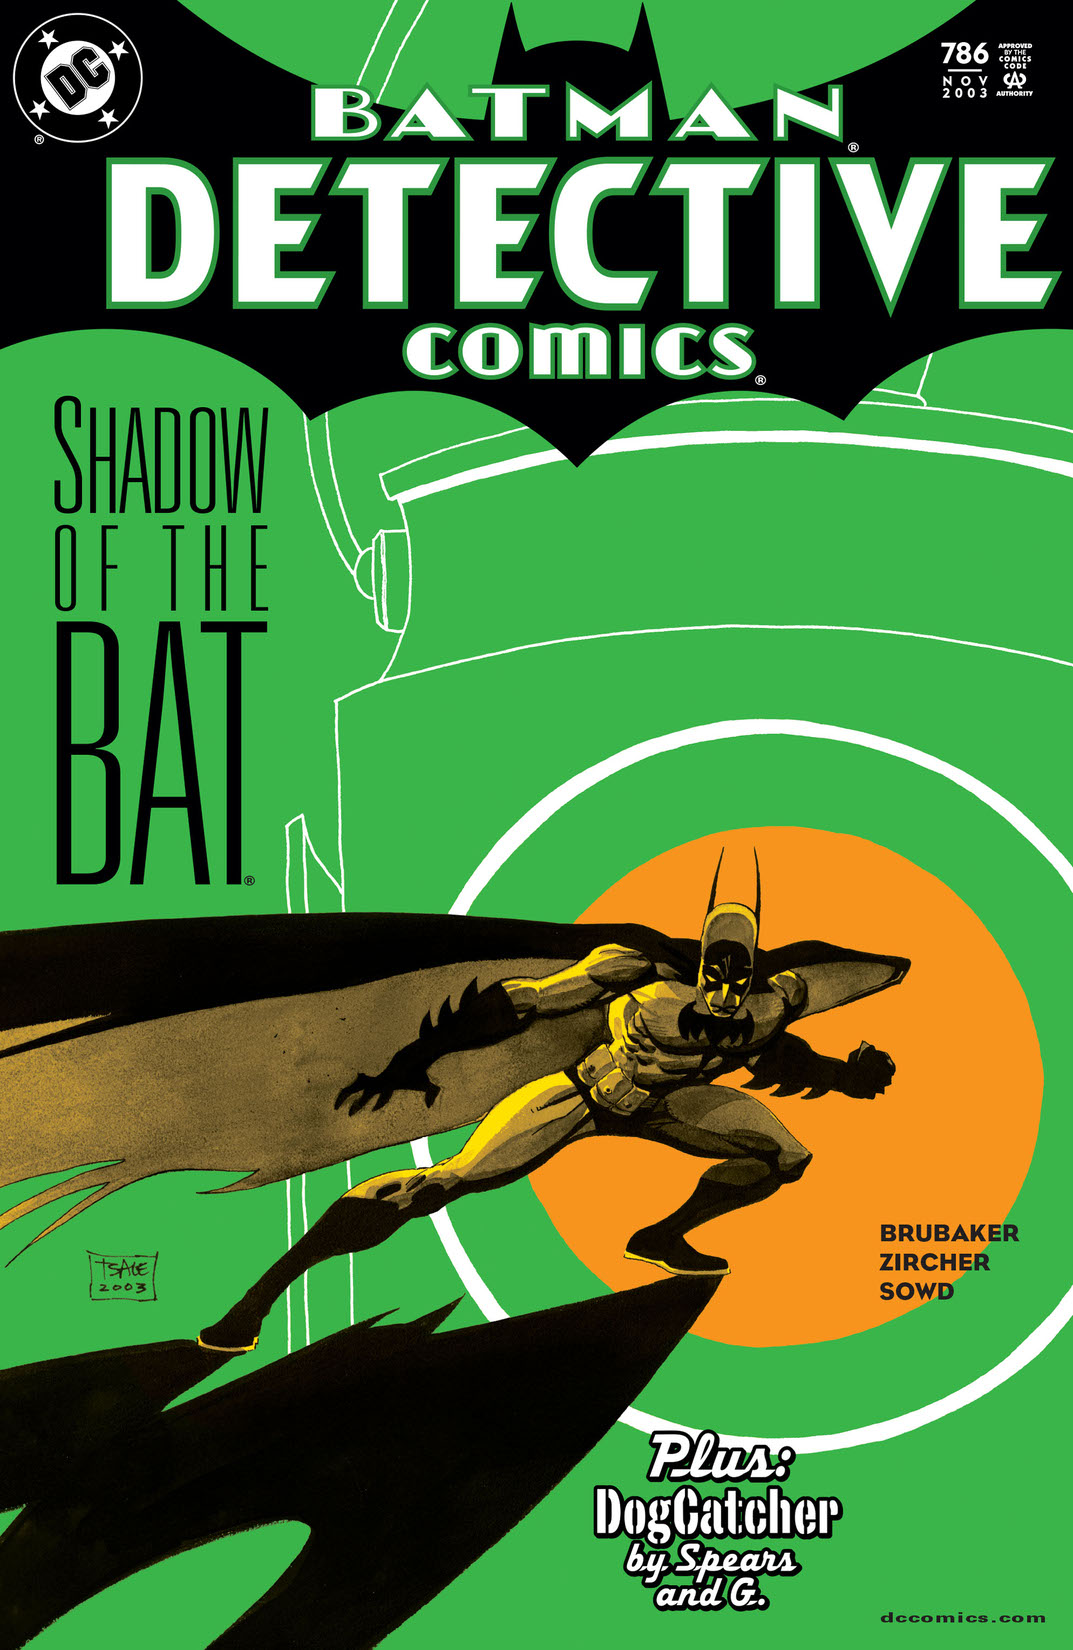 Detective Comics (1937-) #786 preview images